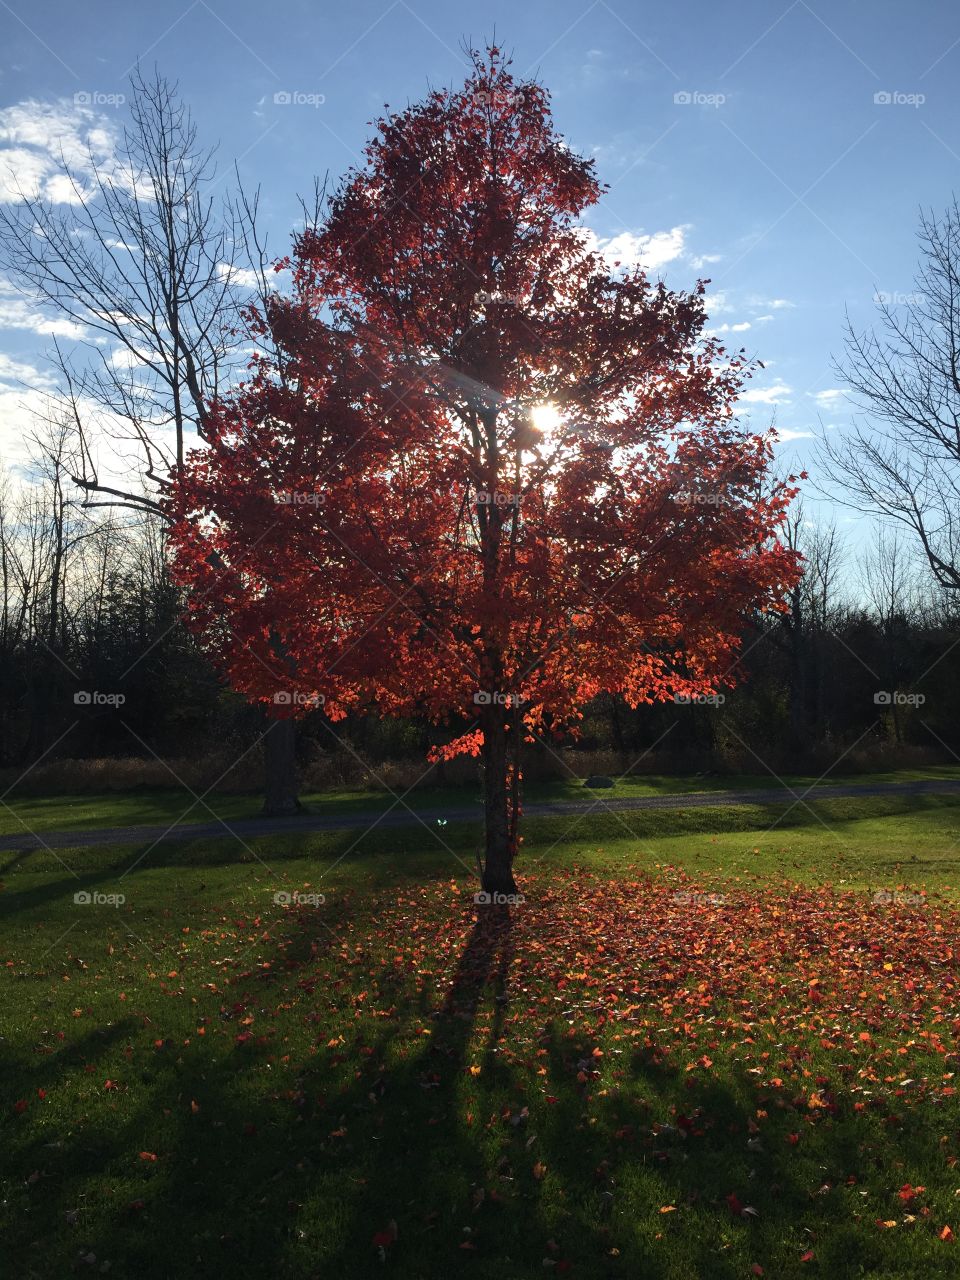 Fall makes death seem to beautiful. Sun peaking thru the trees 